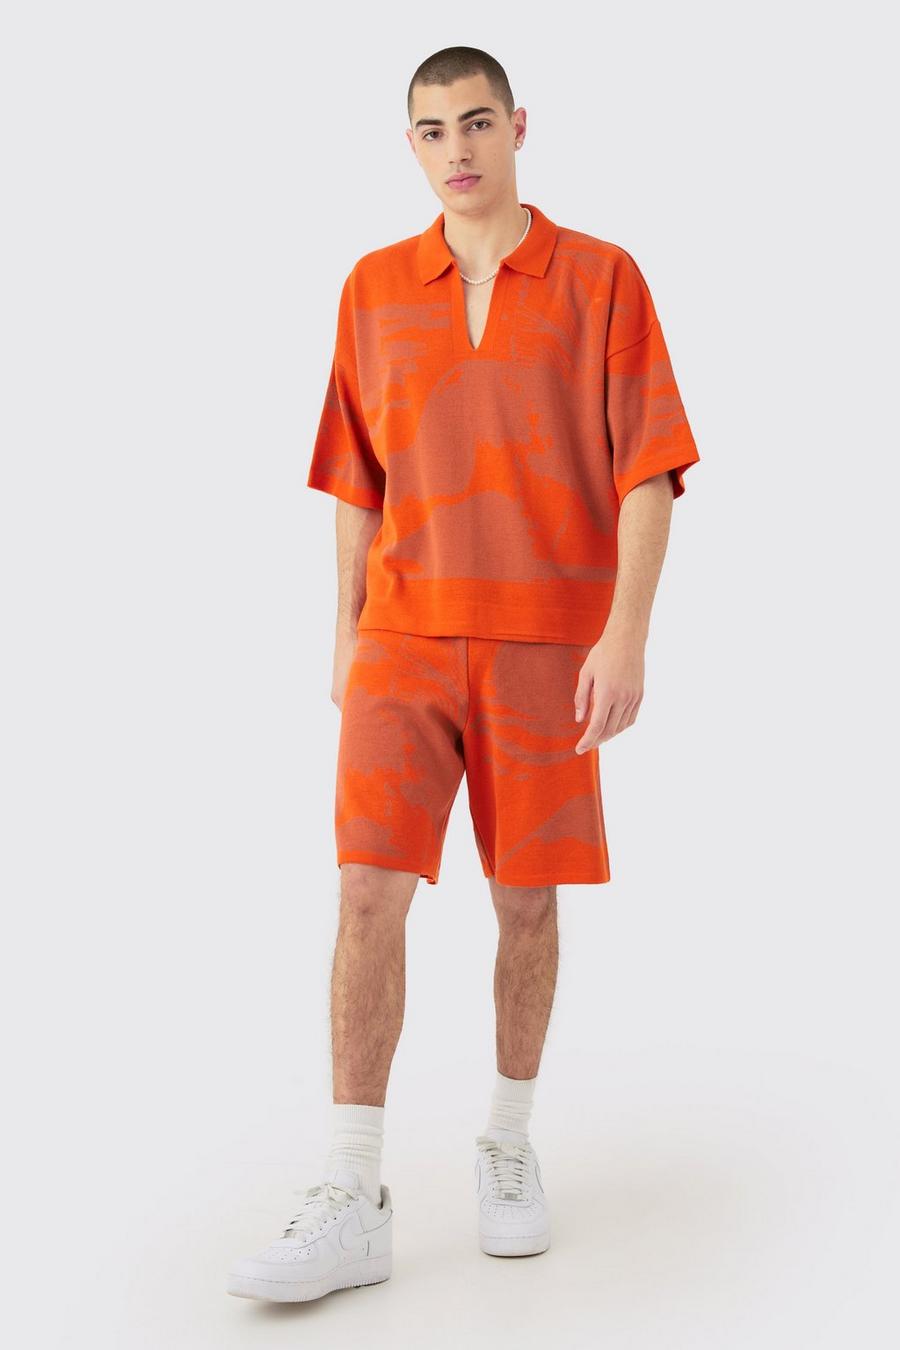 Kastiges Poloshirt und Shorts, Orange